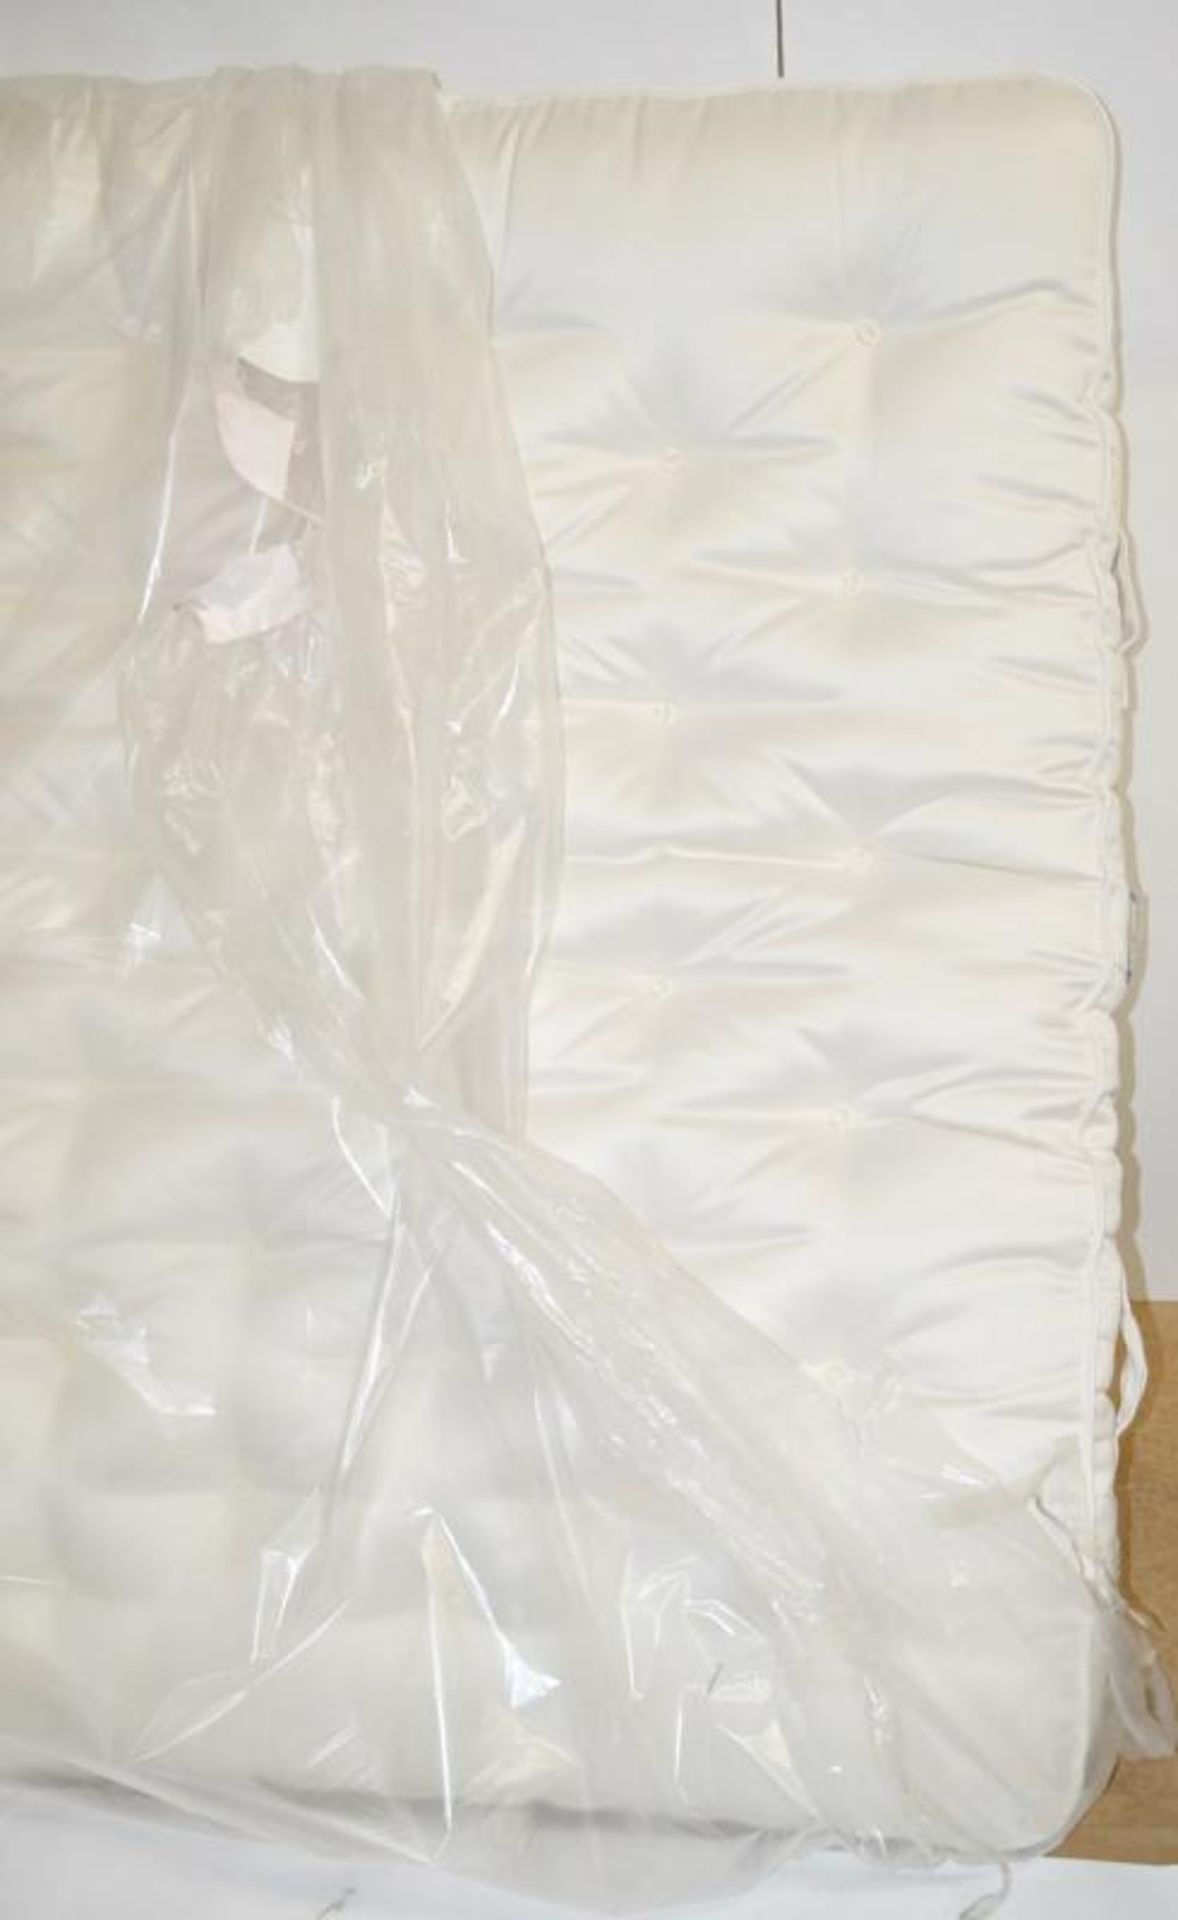 1 x Vispring 'Bedstead Supreme' Luxury Mattress - Custom Size: 175 x 200 x 23cm - Handmade In Great - Image 4 of 10